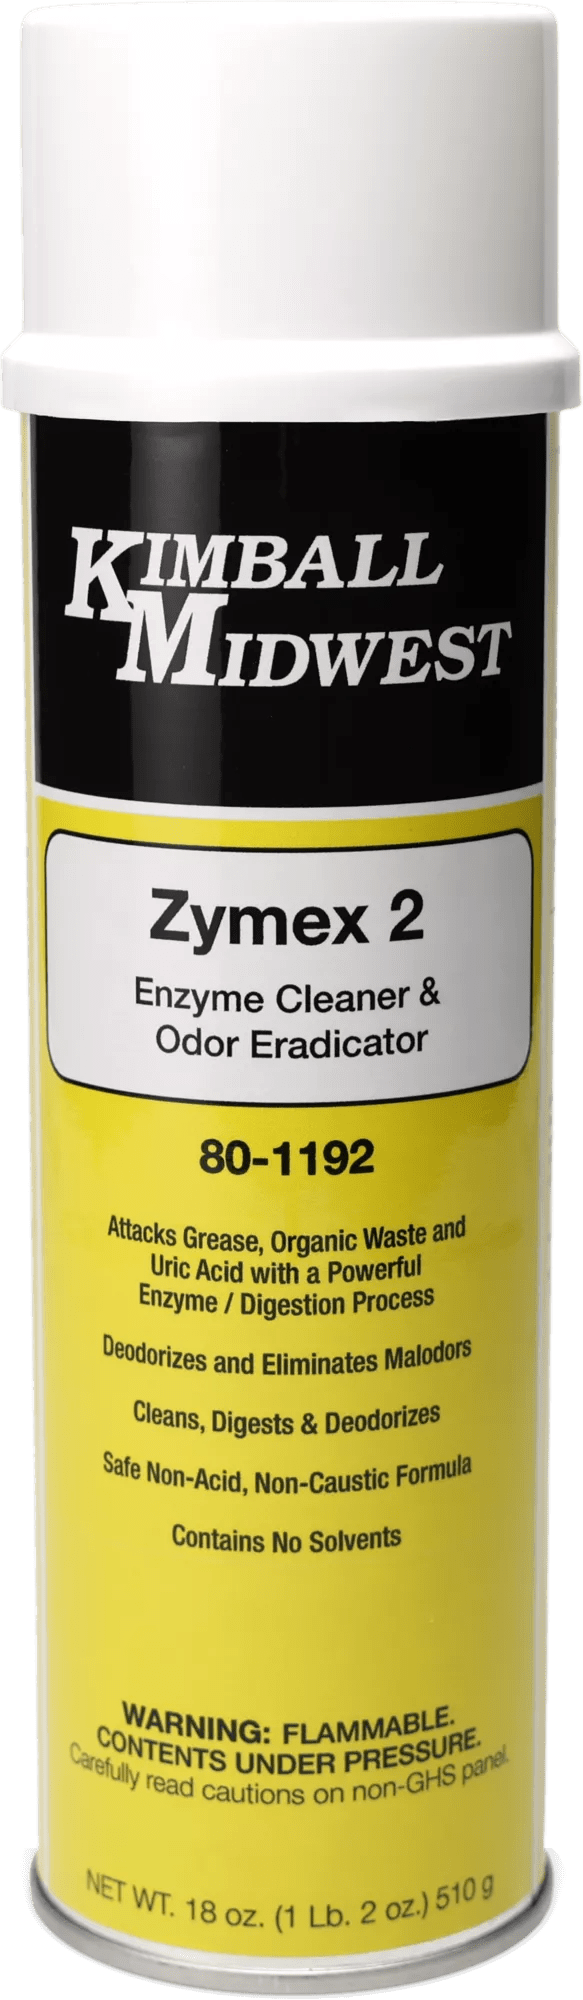 Zymex 2 Enzyme Cleaner & Odor Eradicator - 20 oz.